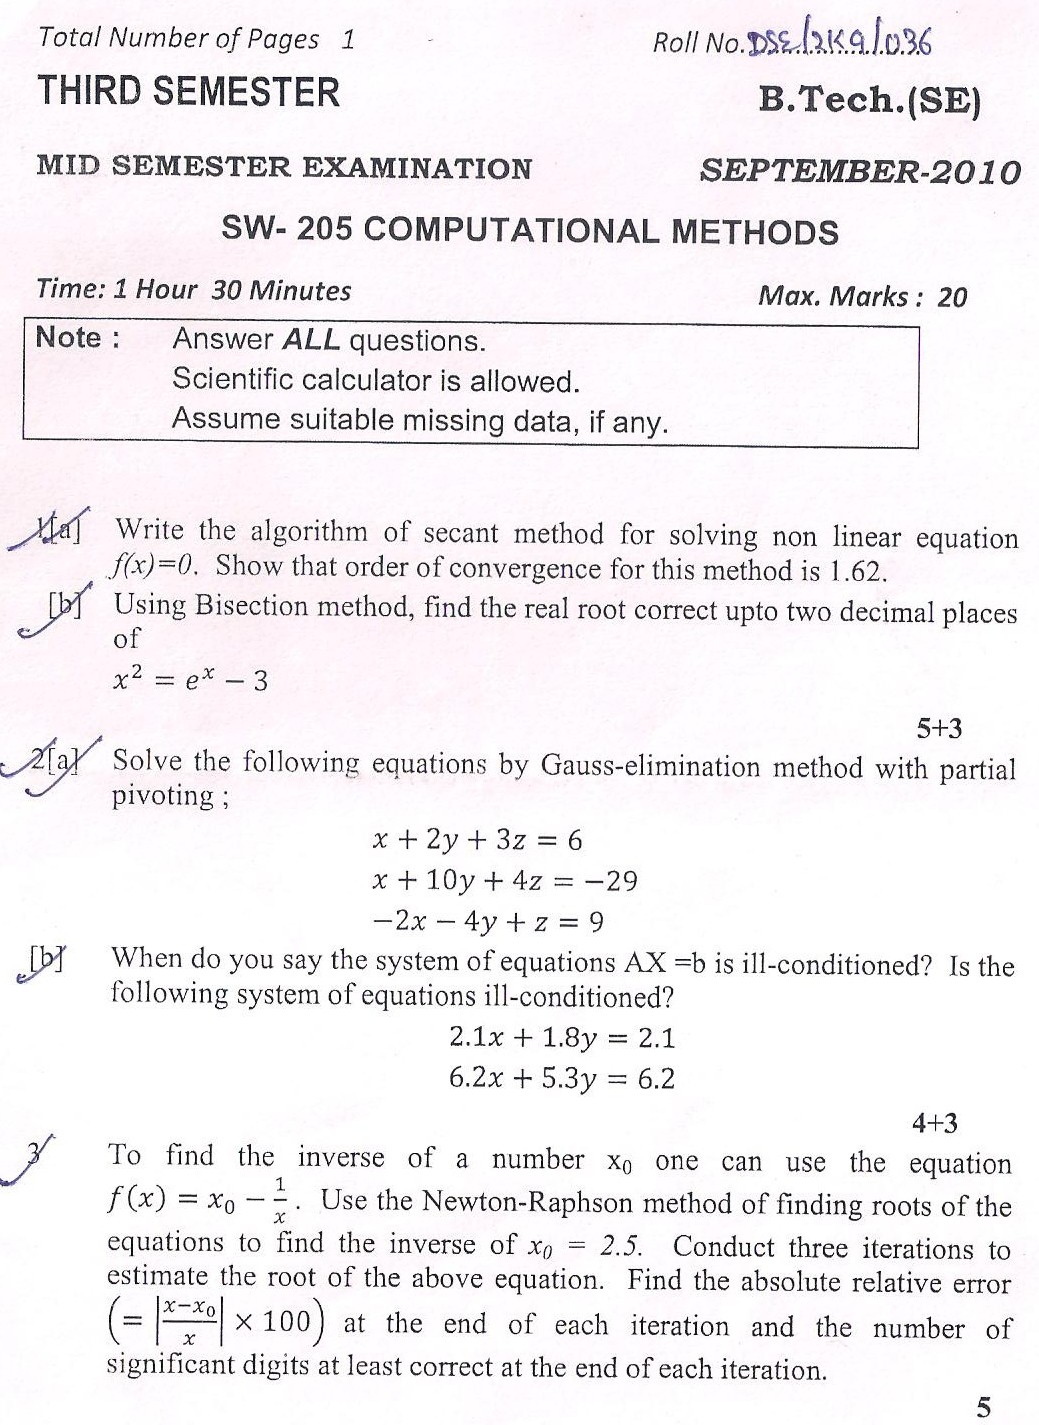 DTU Question Papers 2010 – 3 Semester - Mid Sem - SW-205